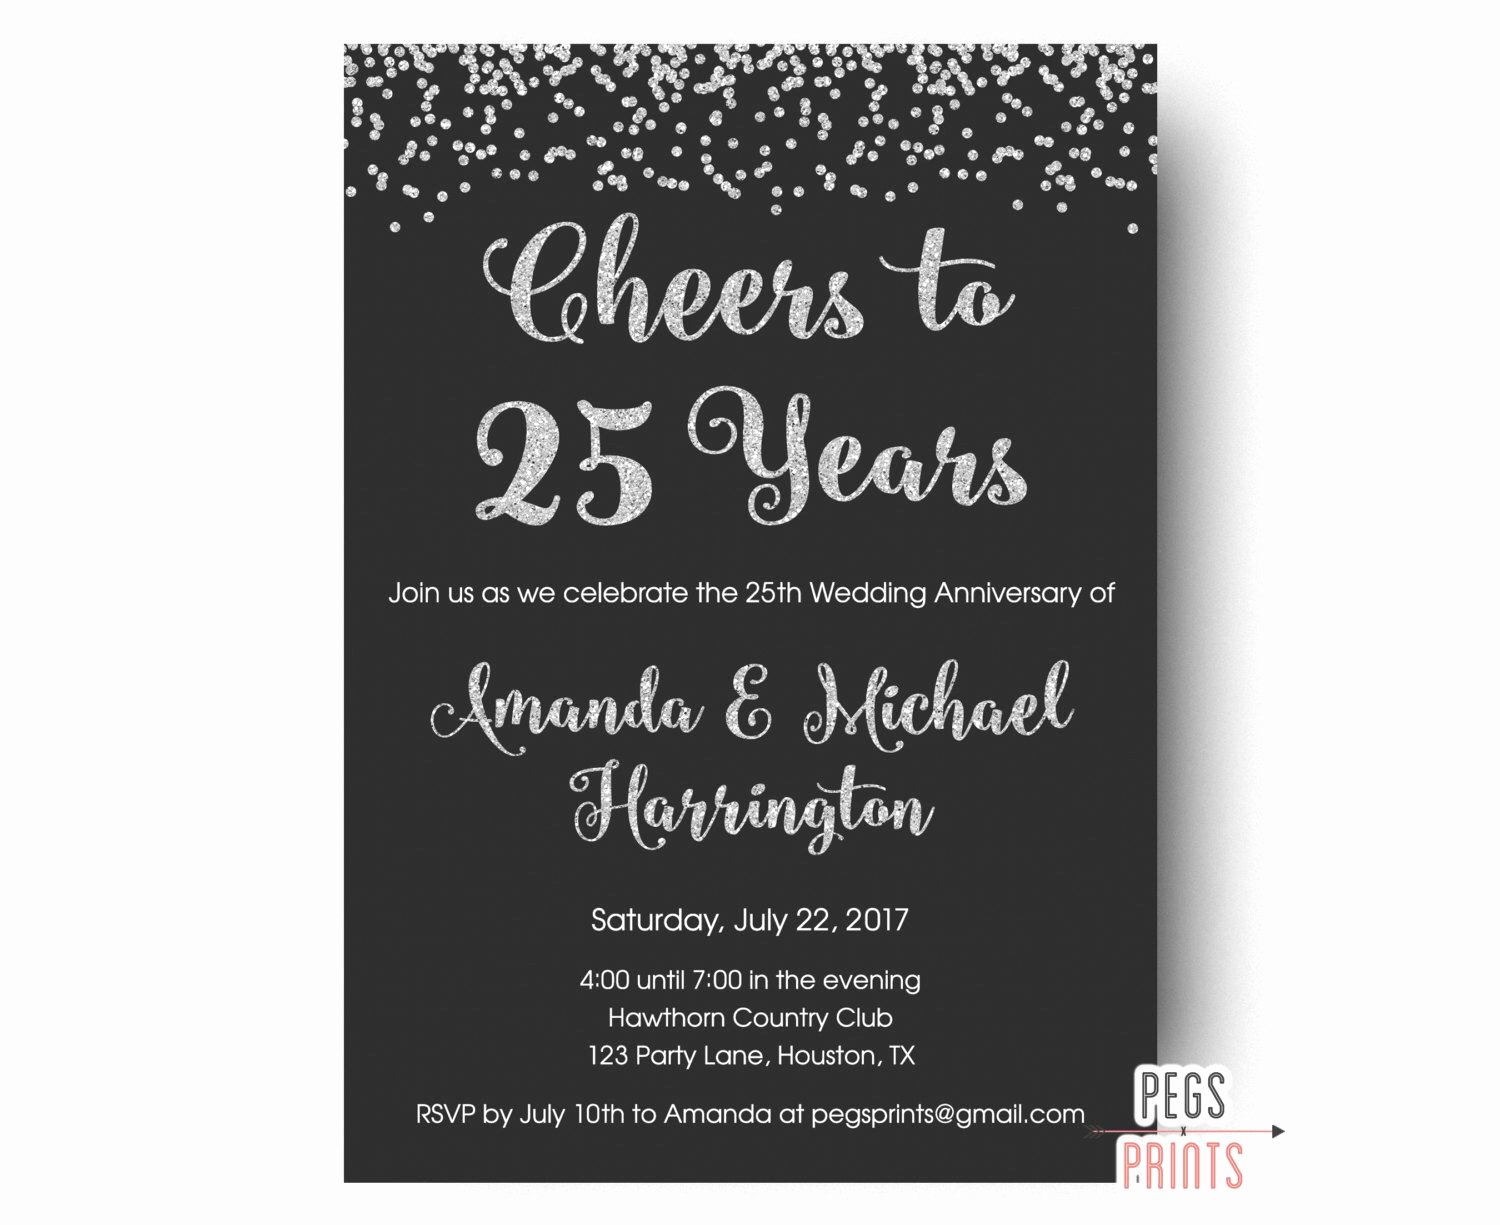 25th Wedding Anniversary Invitation Cards Fresh 25th Anniversary Invitations Printable 25th Wedding Anniversary Invitations…